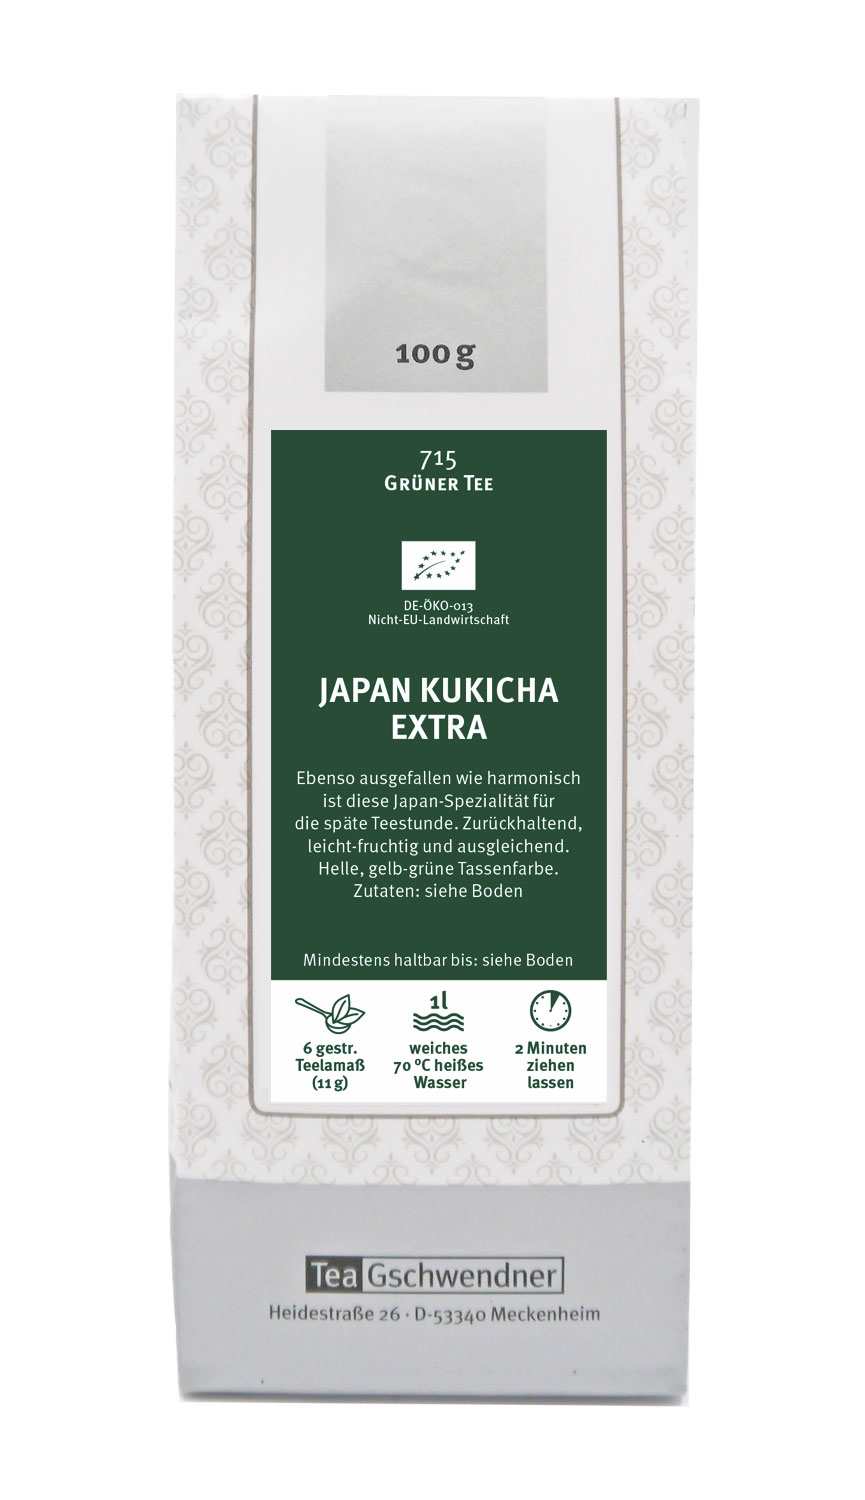 Japan Kukicha Extra organic